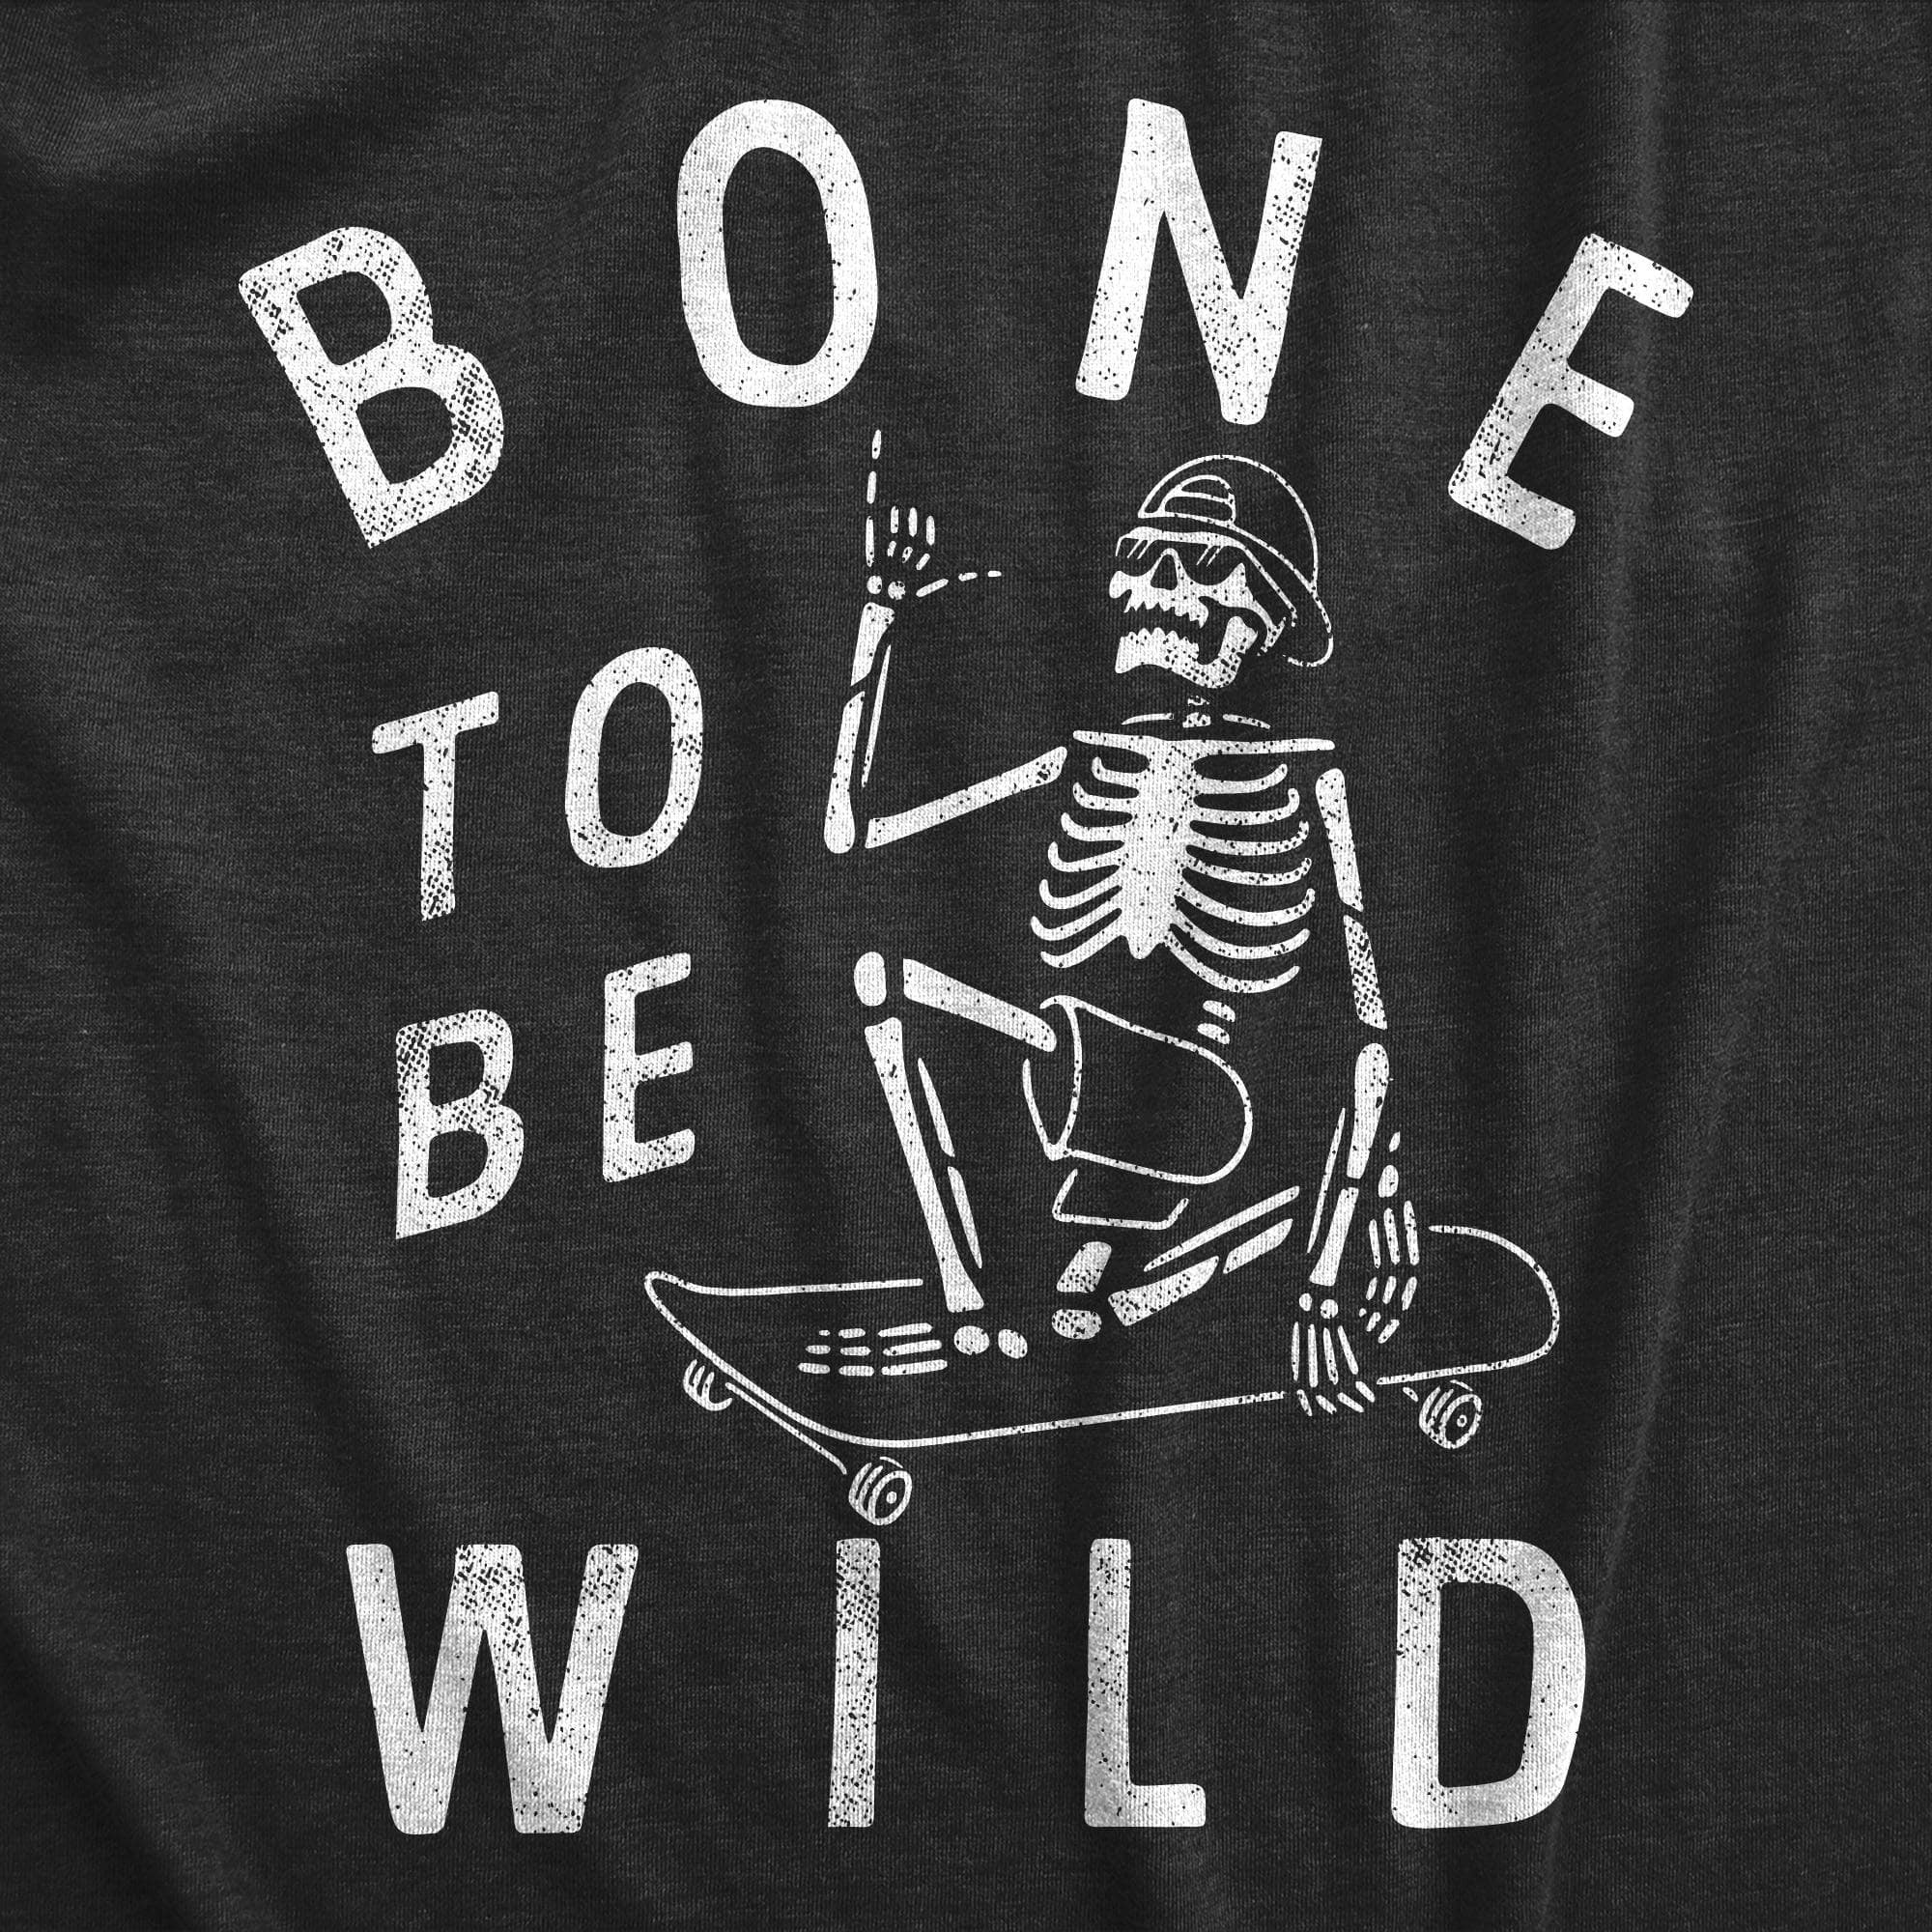 Bone To Be Wild Women's Tshirt  -  Crazy Dog T-Shirts